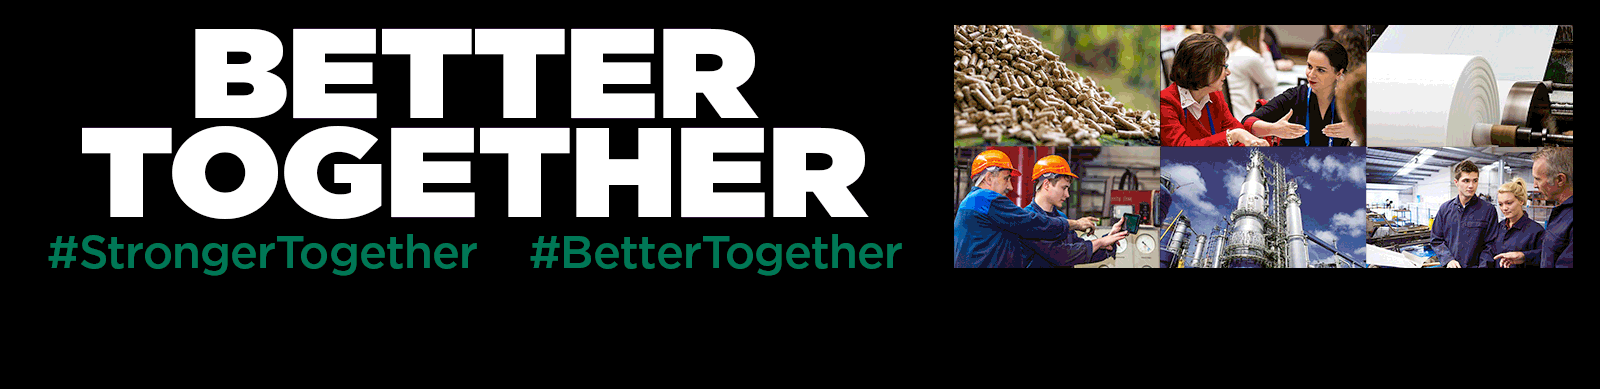 Better Together Hero Image.gif